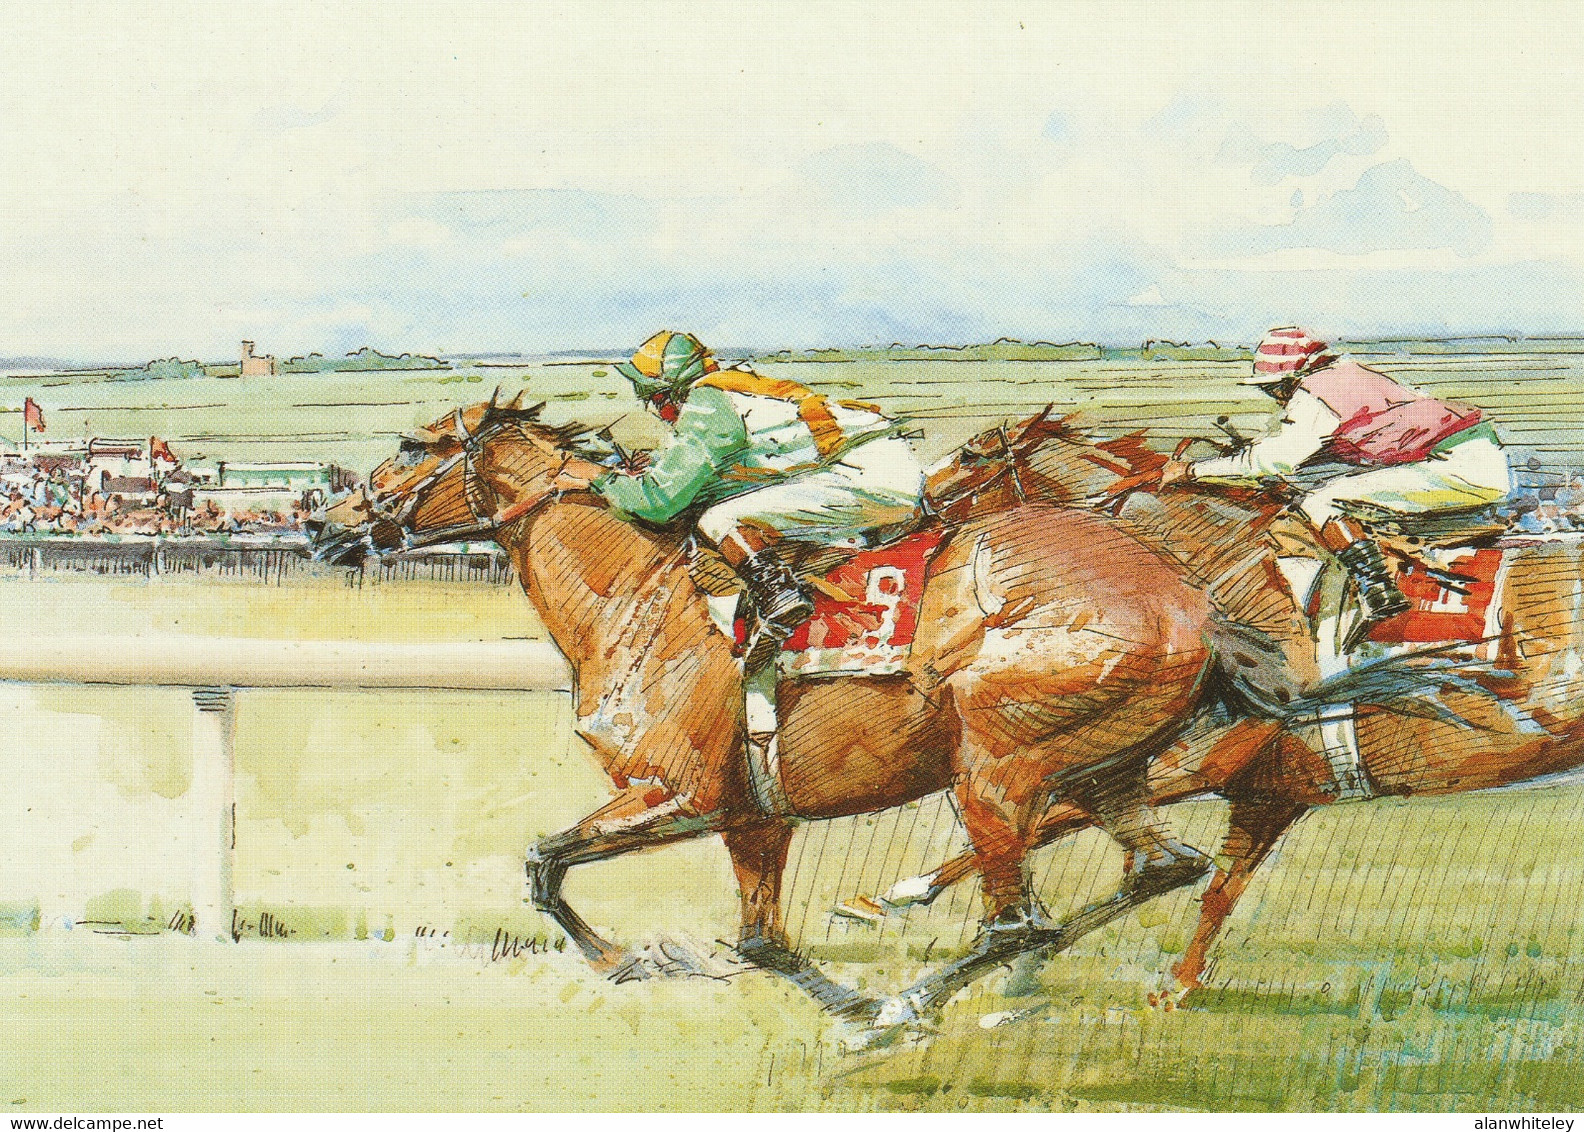 IRELAND 1996 Irish Horse Racing: Set Of 5 Postcards MINT/UNUSED - Enteros Postales